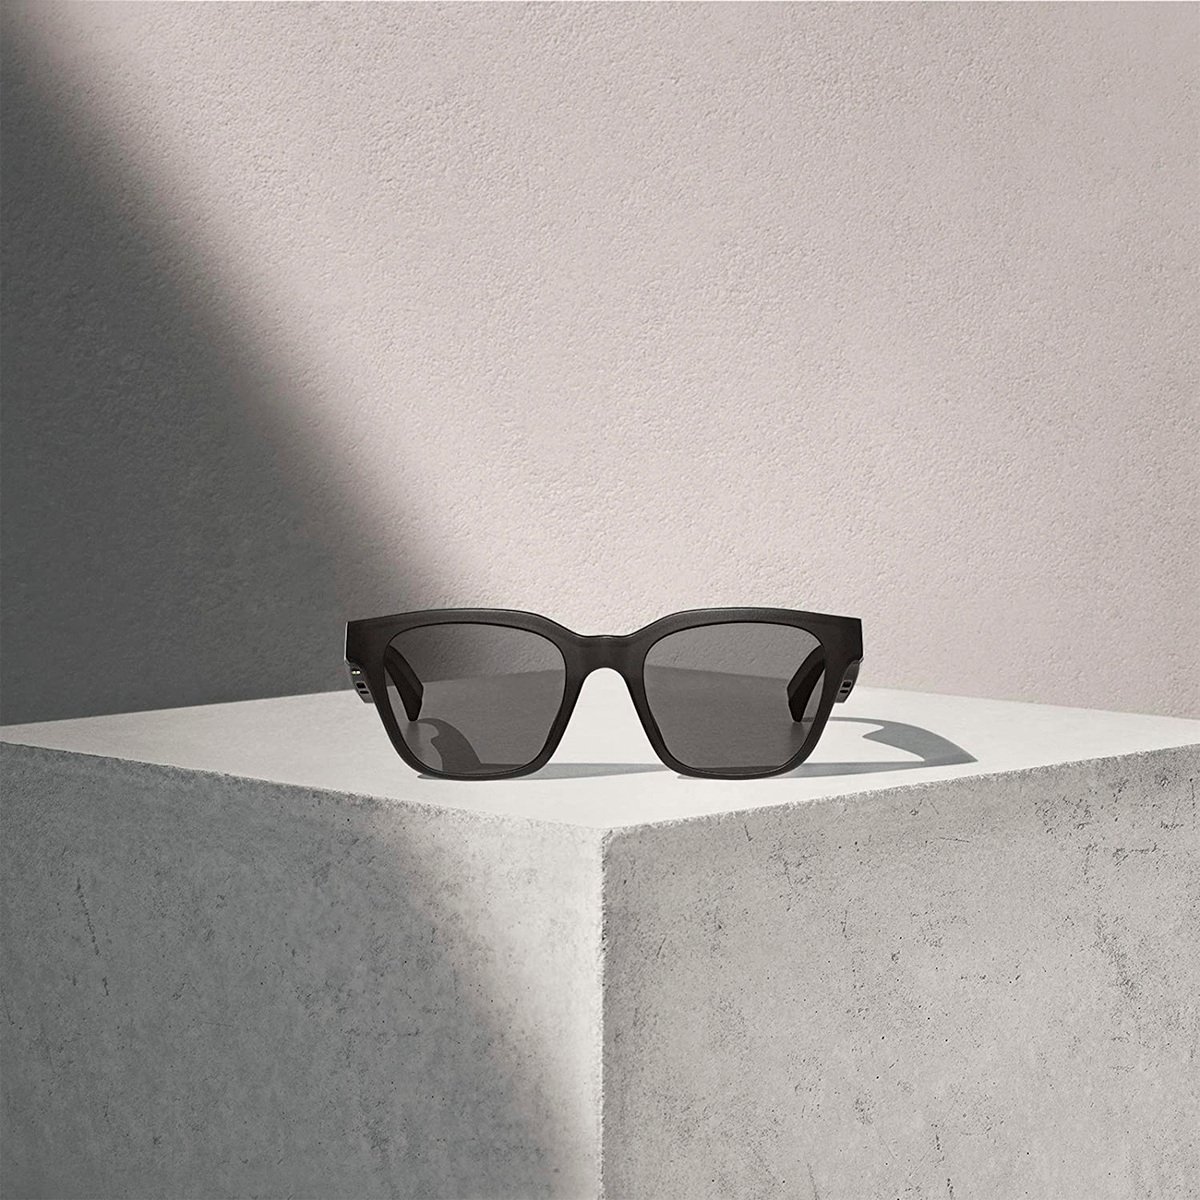 Bose Frames Audio Sunglasses 831744-0100 Small/Medium (Global Fit), Black